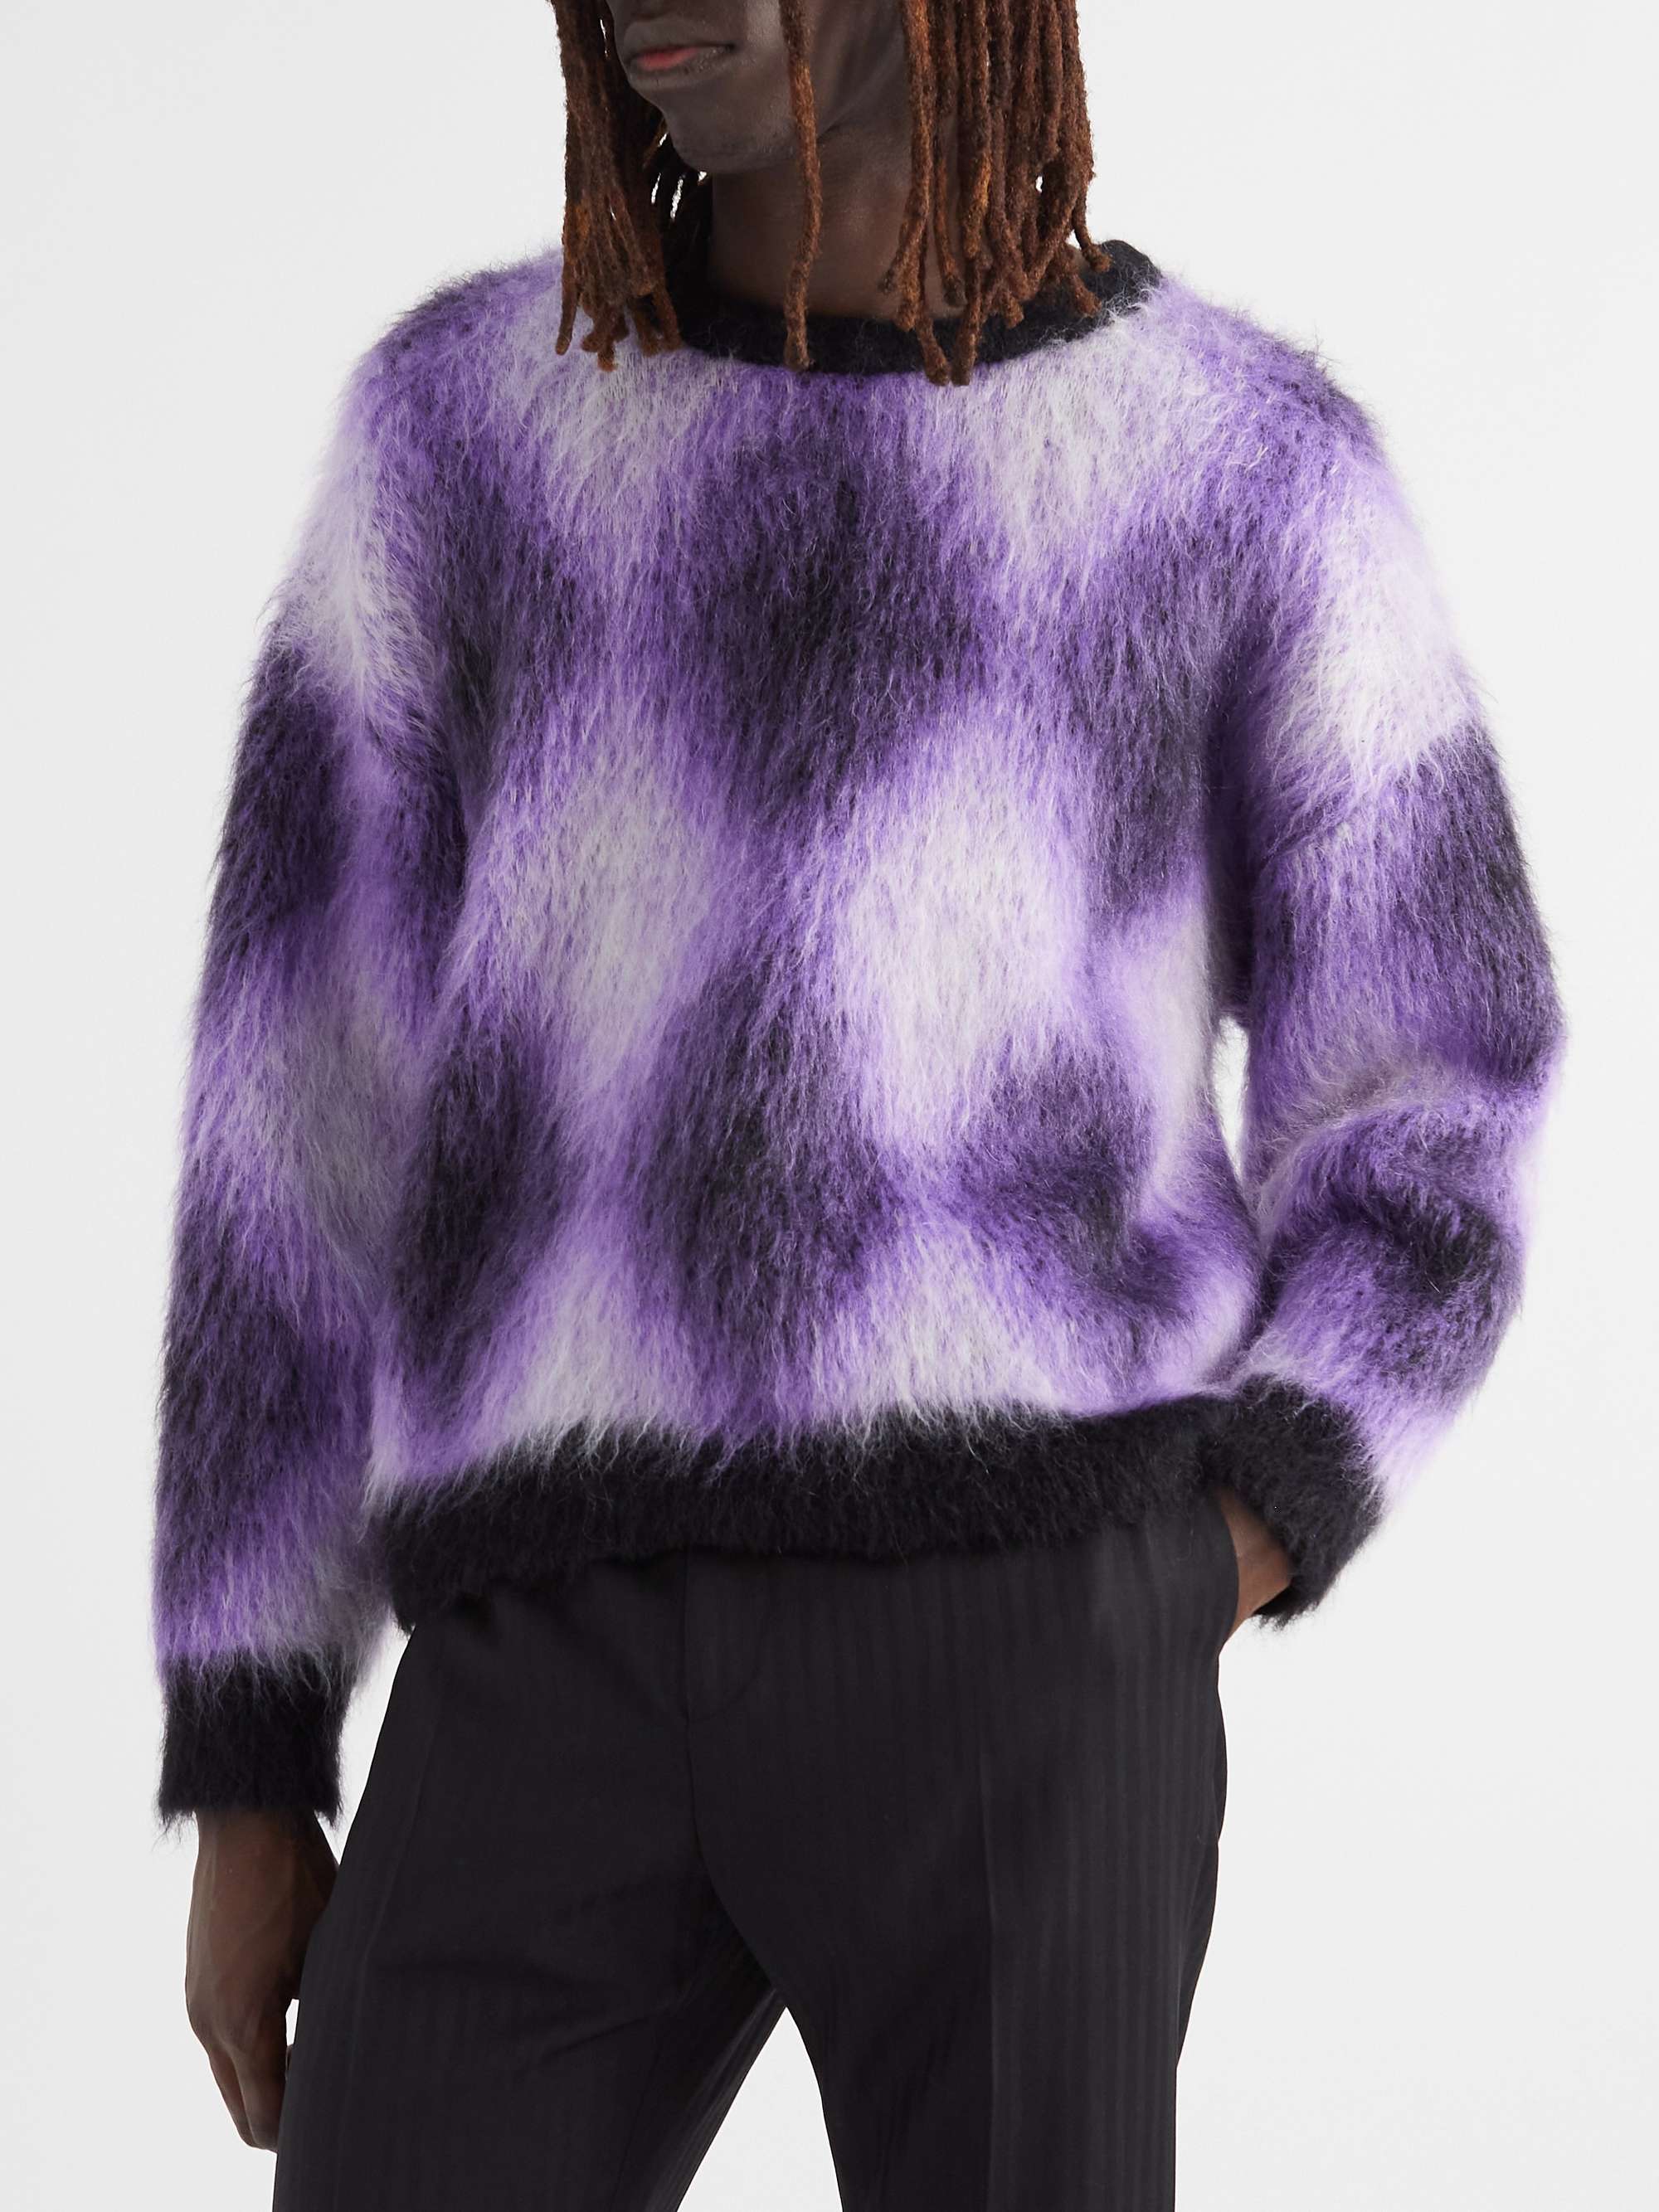 CELINE HOMME Argyle Mohair-Blend Sweater